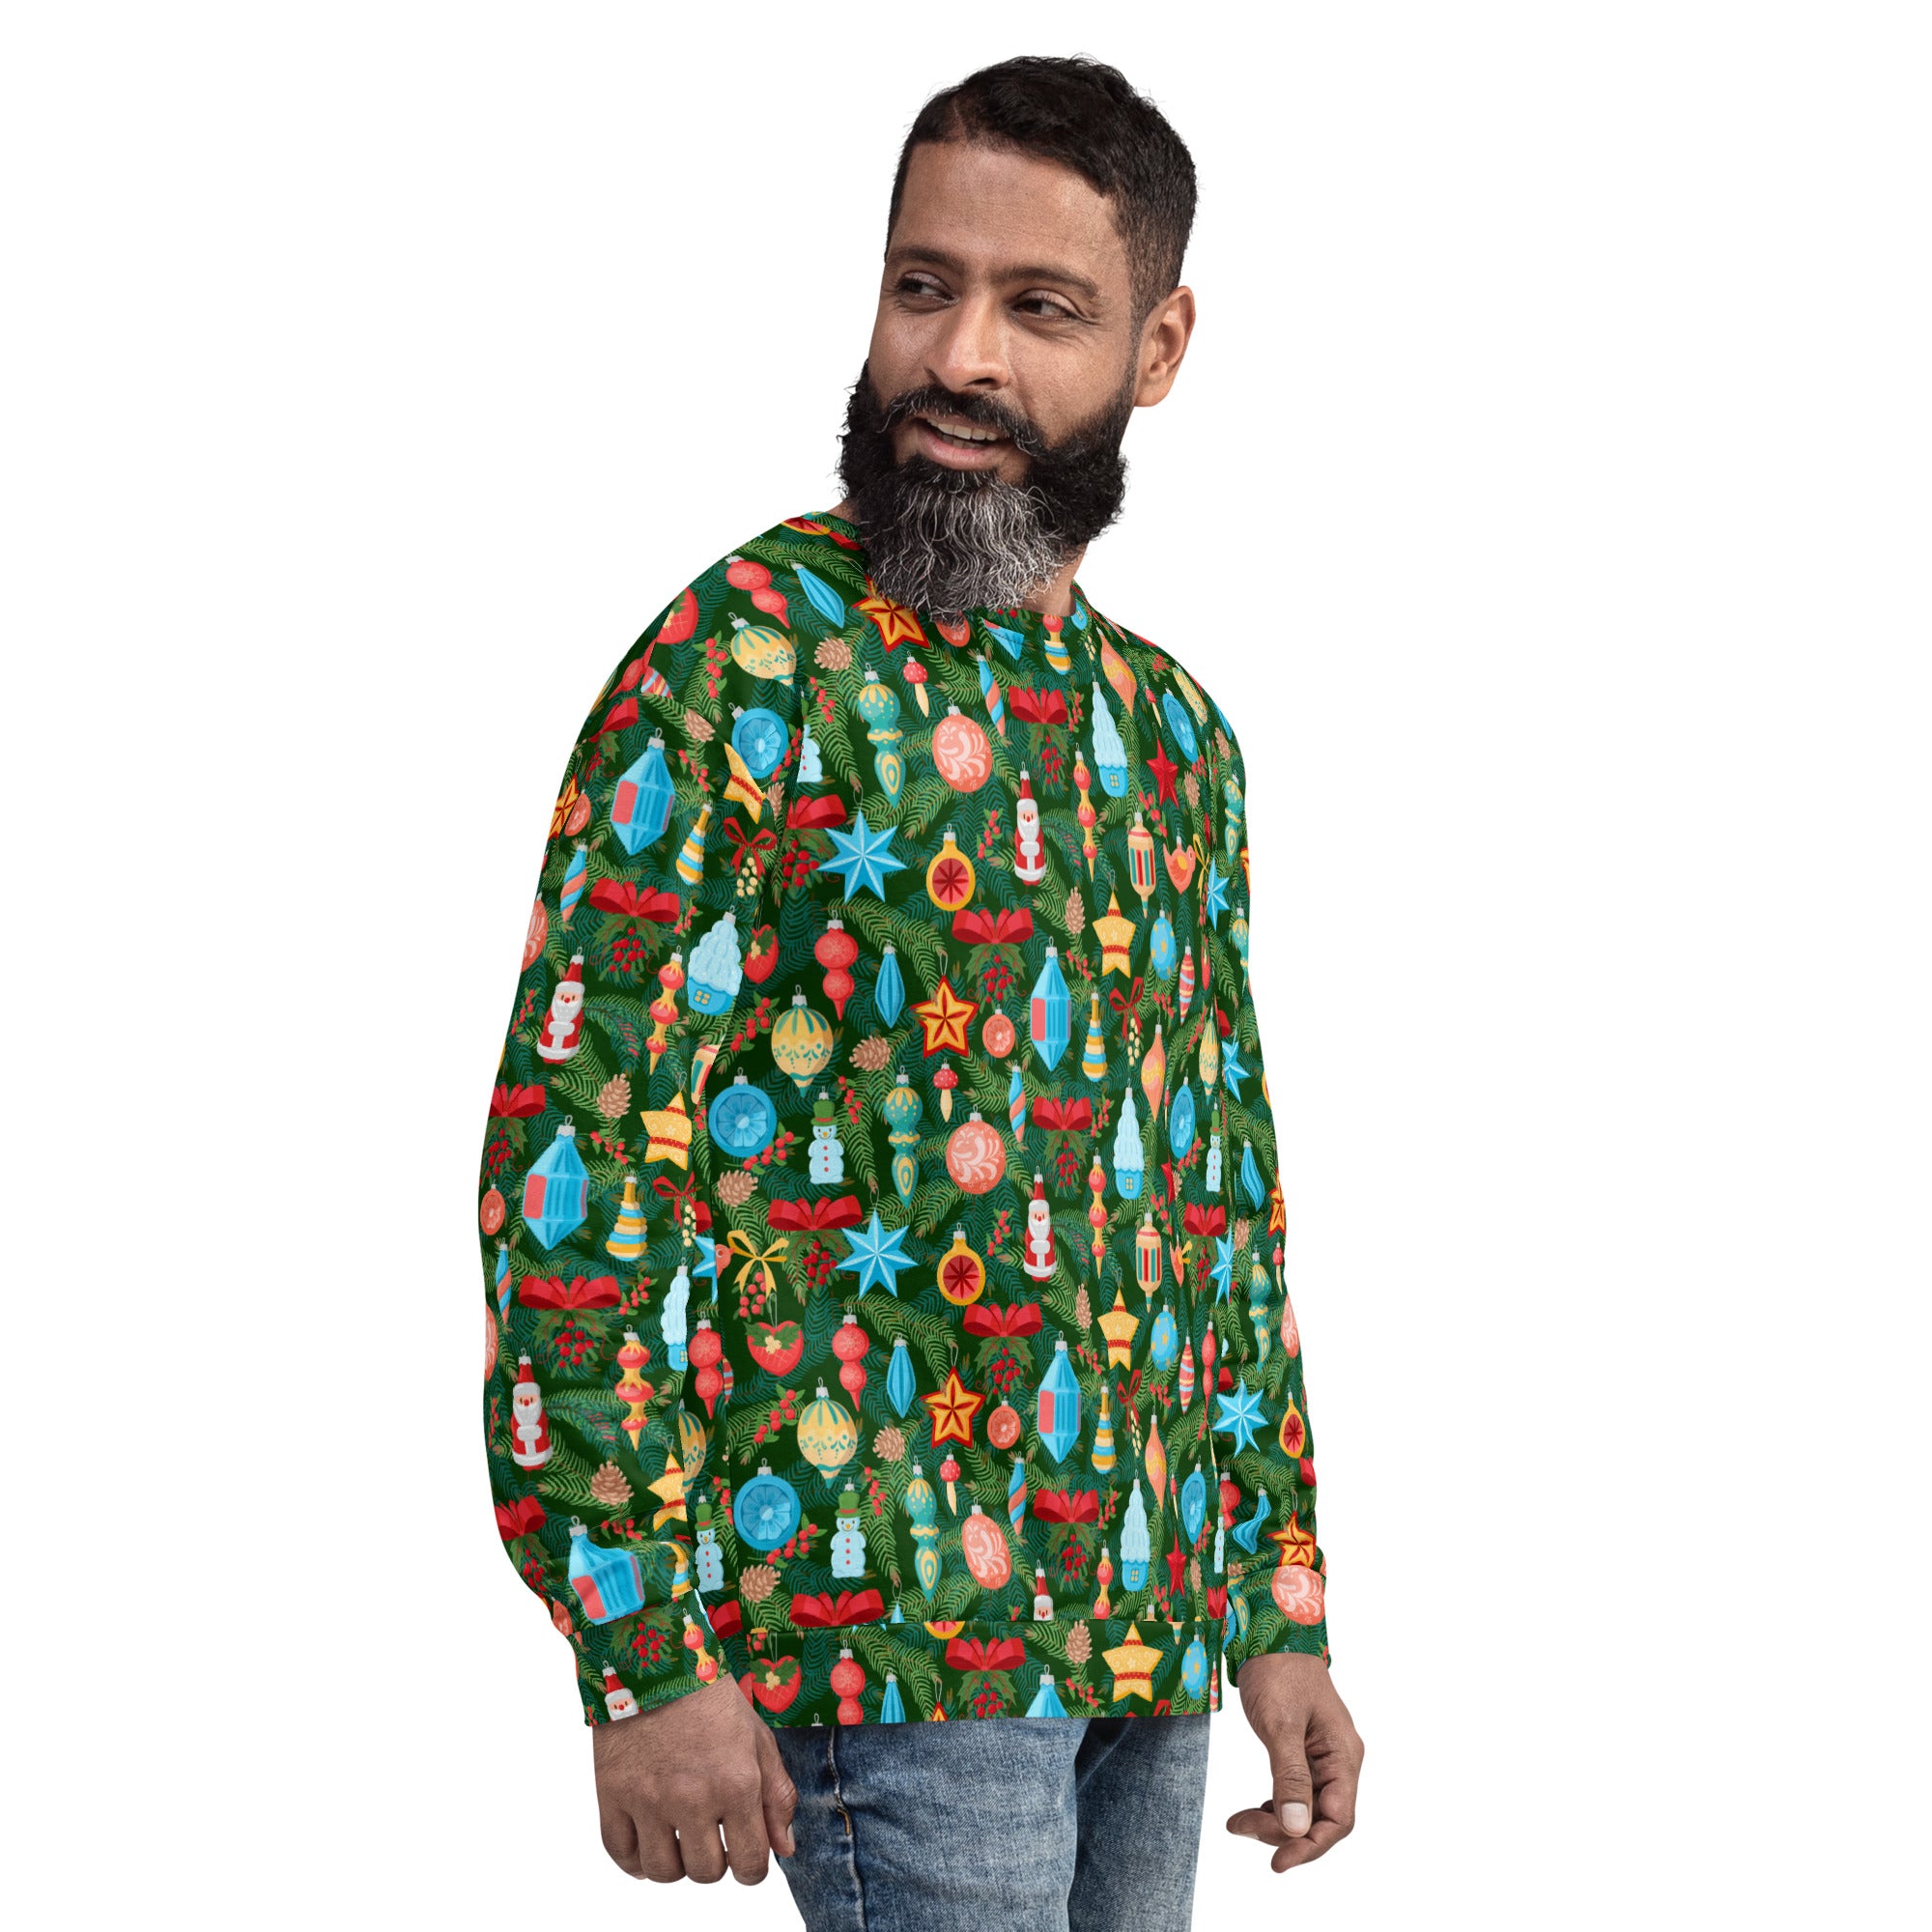 Decorated Tree Unisex Sweatshirt